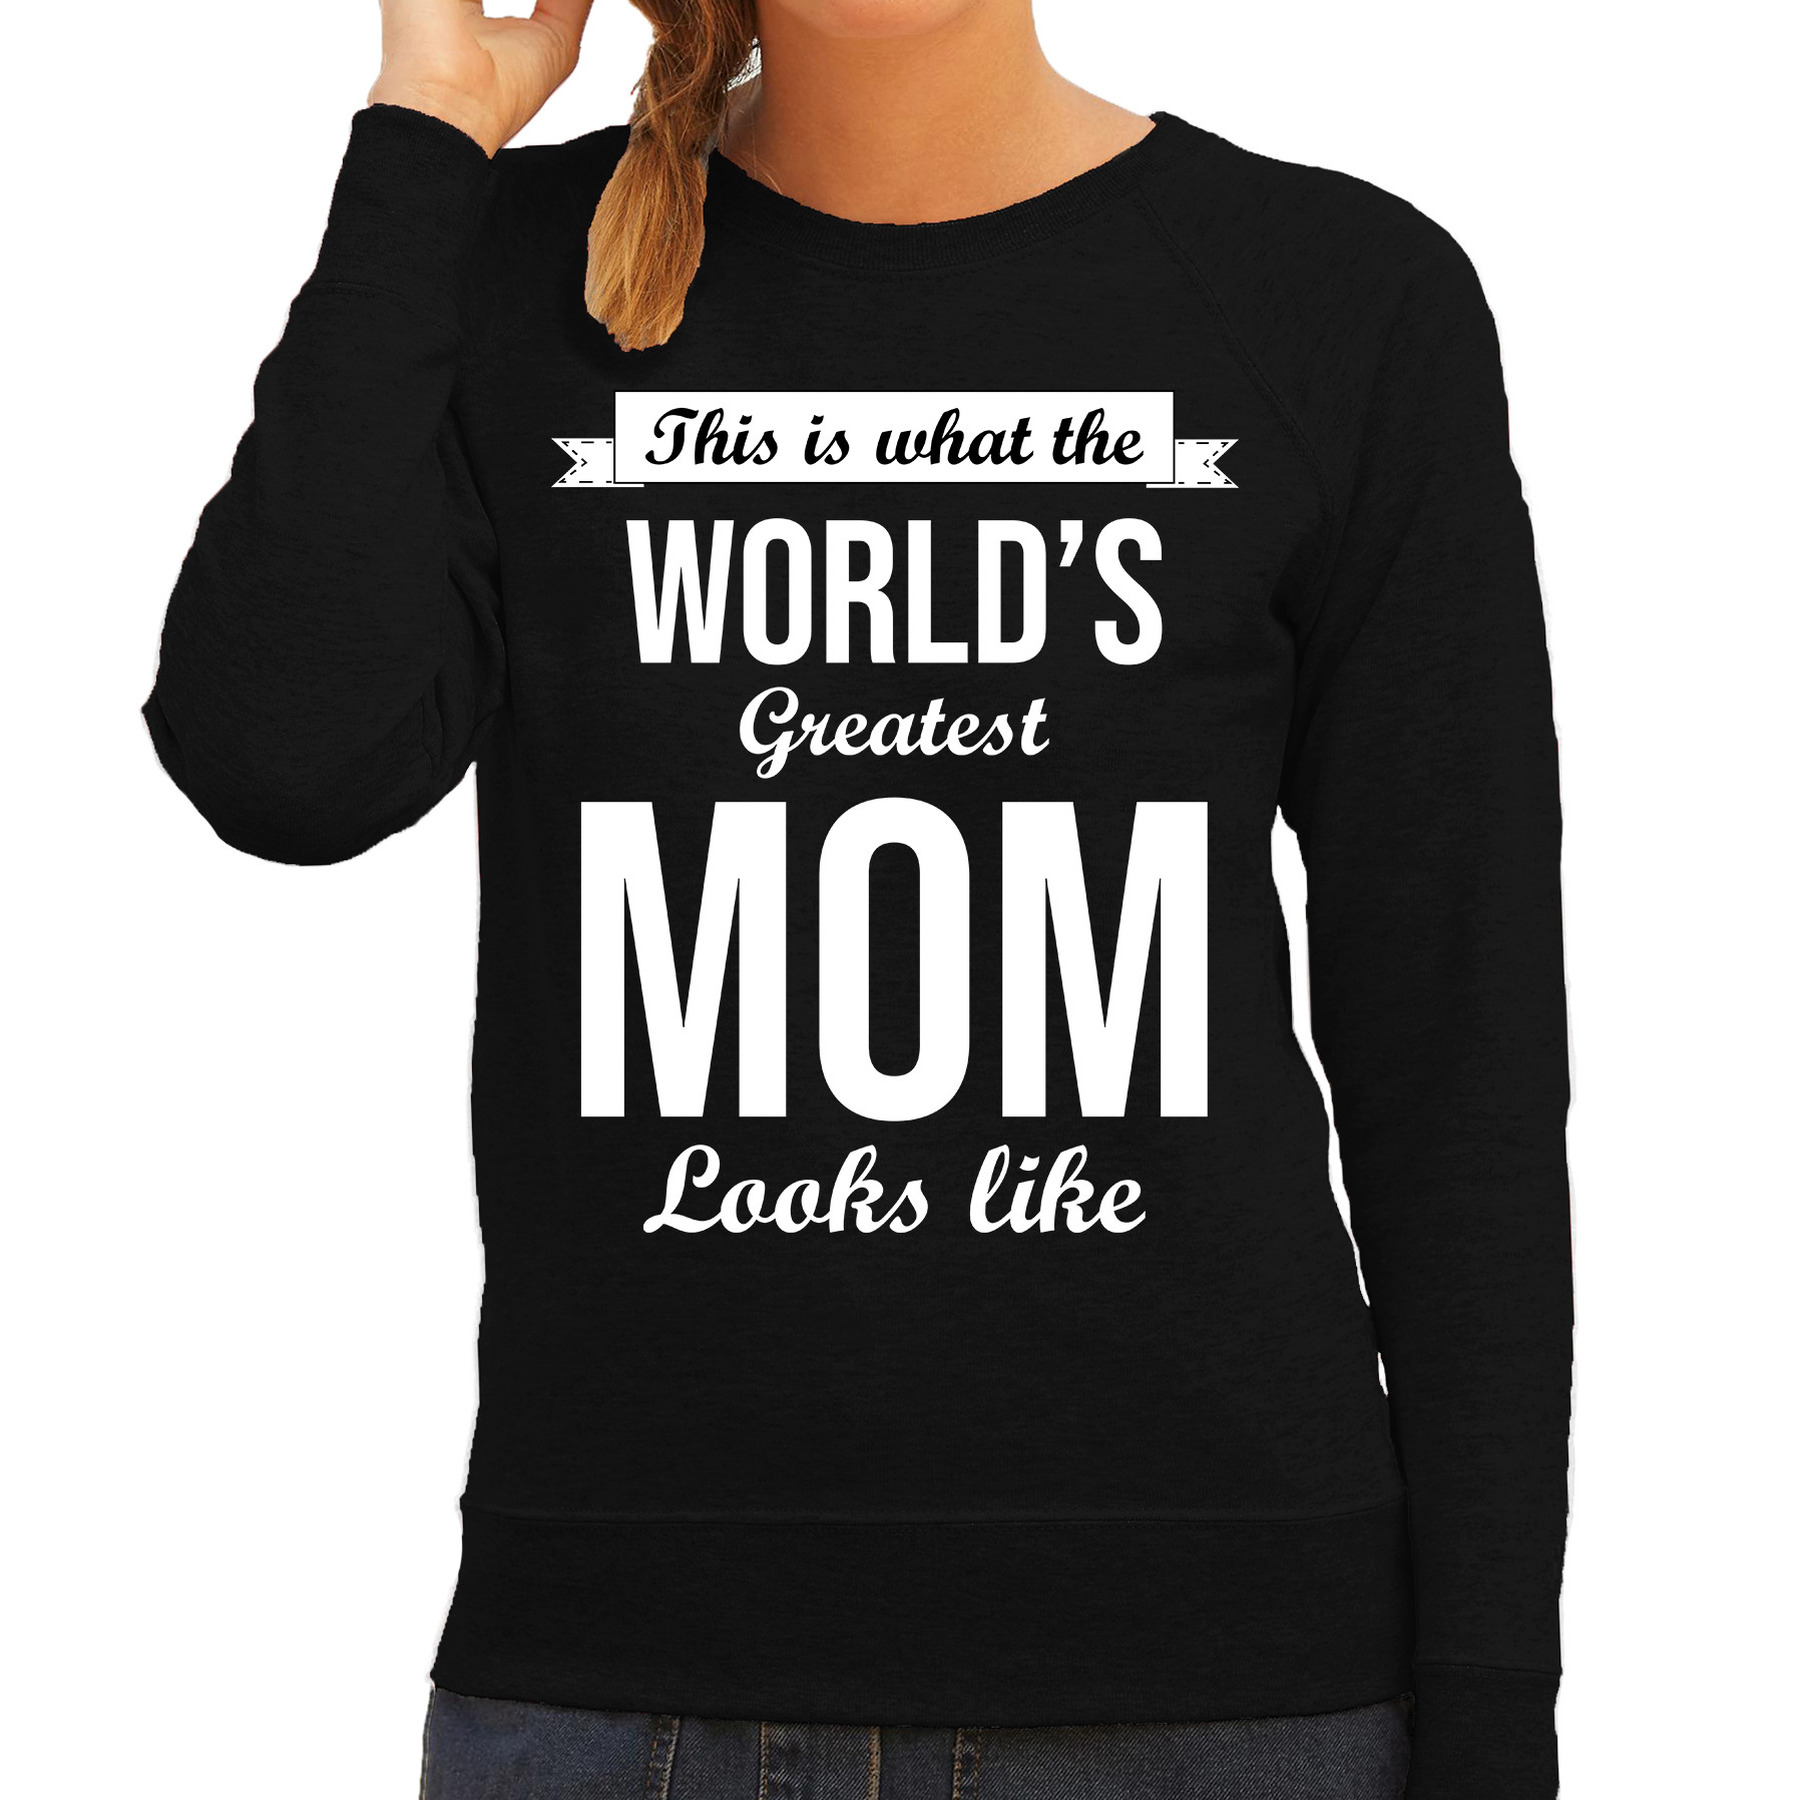 Worlds greatest mom cadeau sweater zwart voor dames